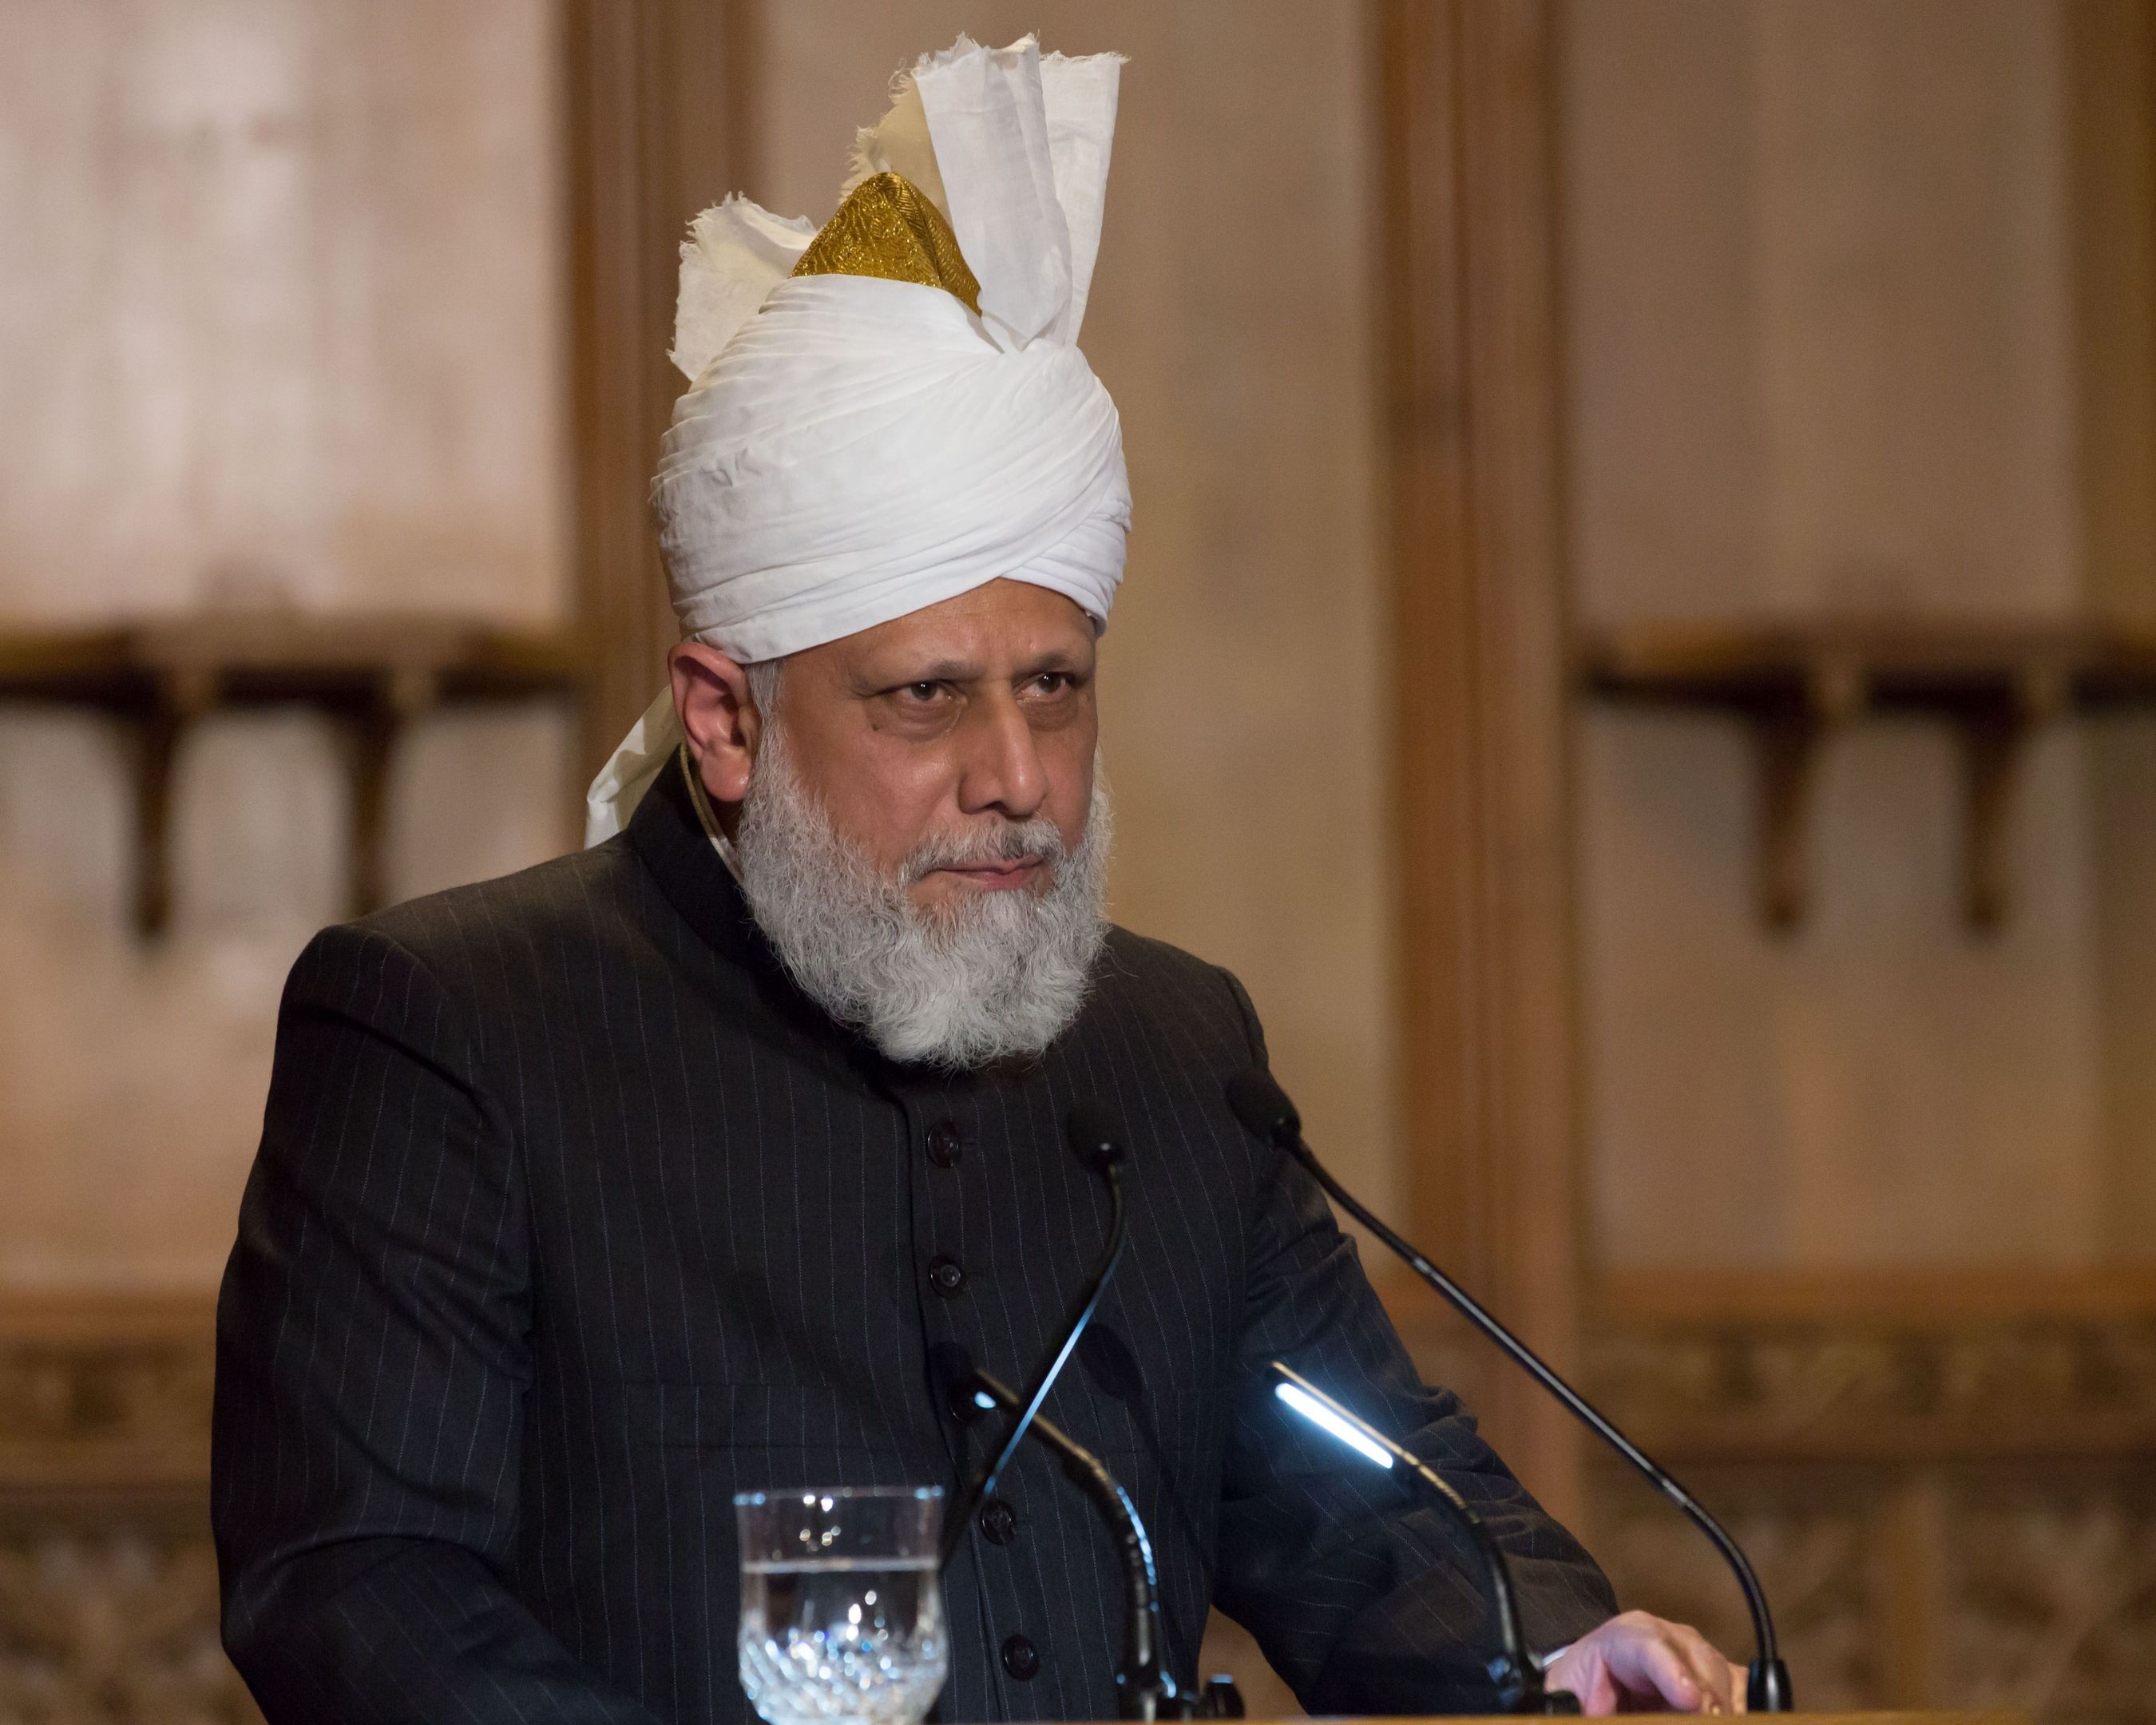 His Holiness Hazrat Mirza Masroor Ahmad (the Khalifa of Islam) (PRNewsFoto/AHMADIYYA MUSLIM ASSOCIATION)